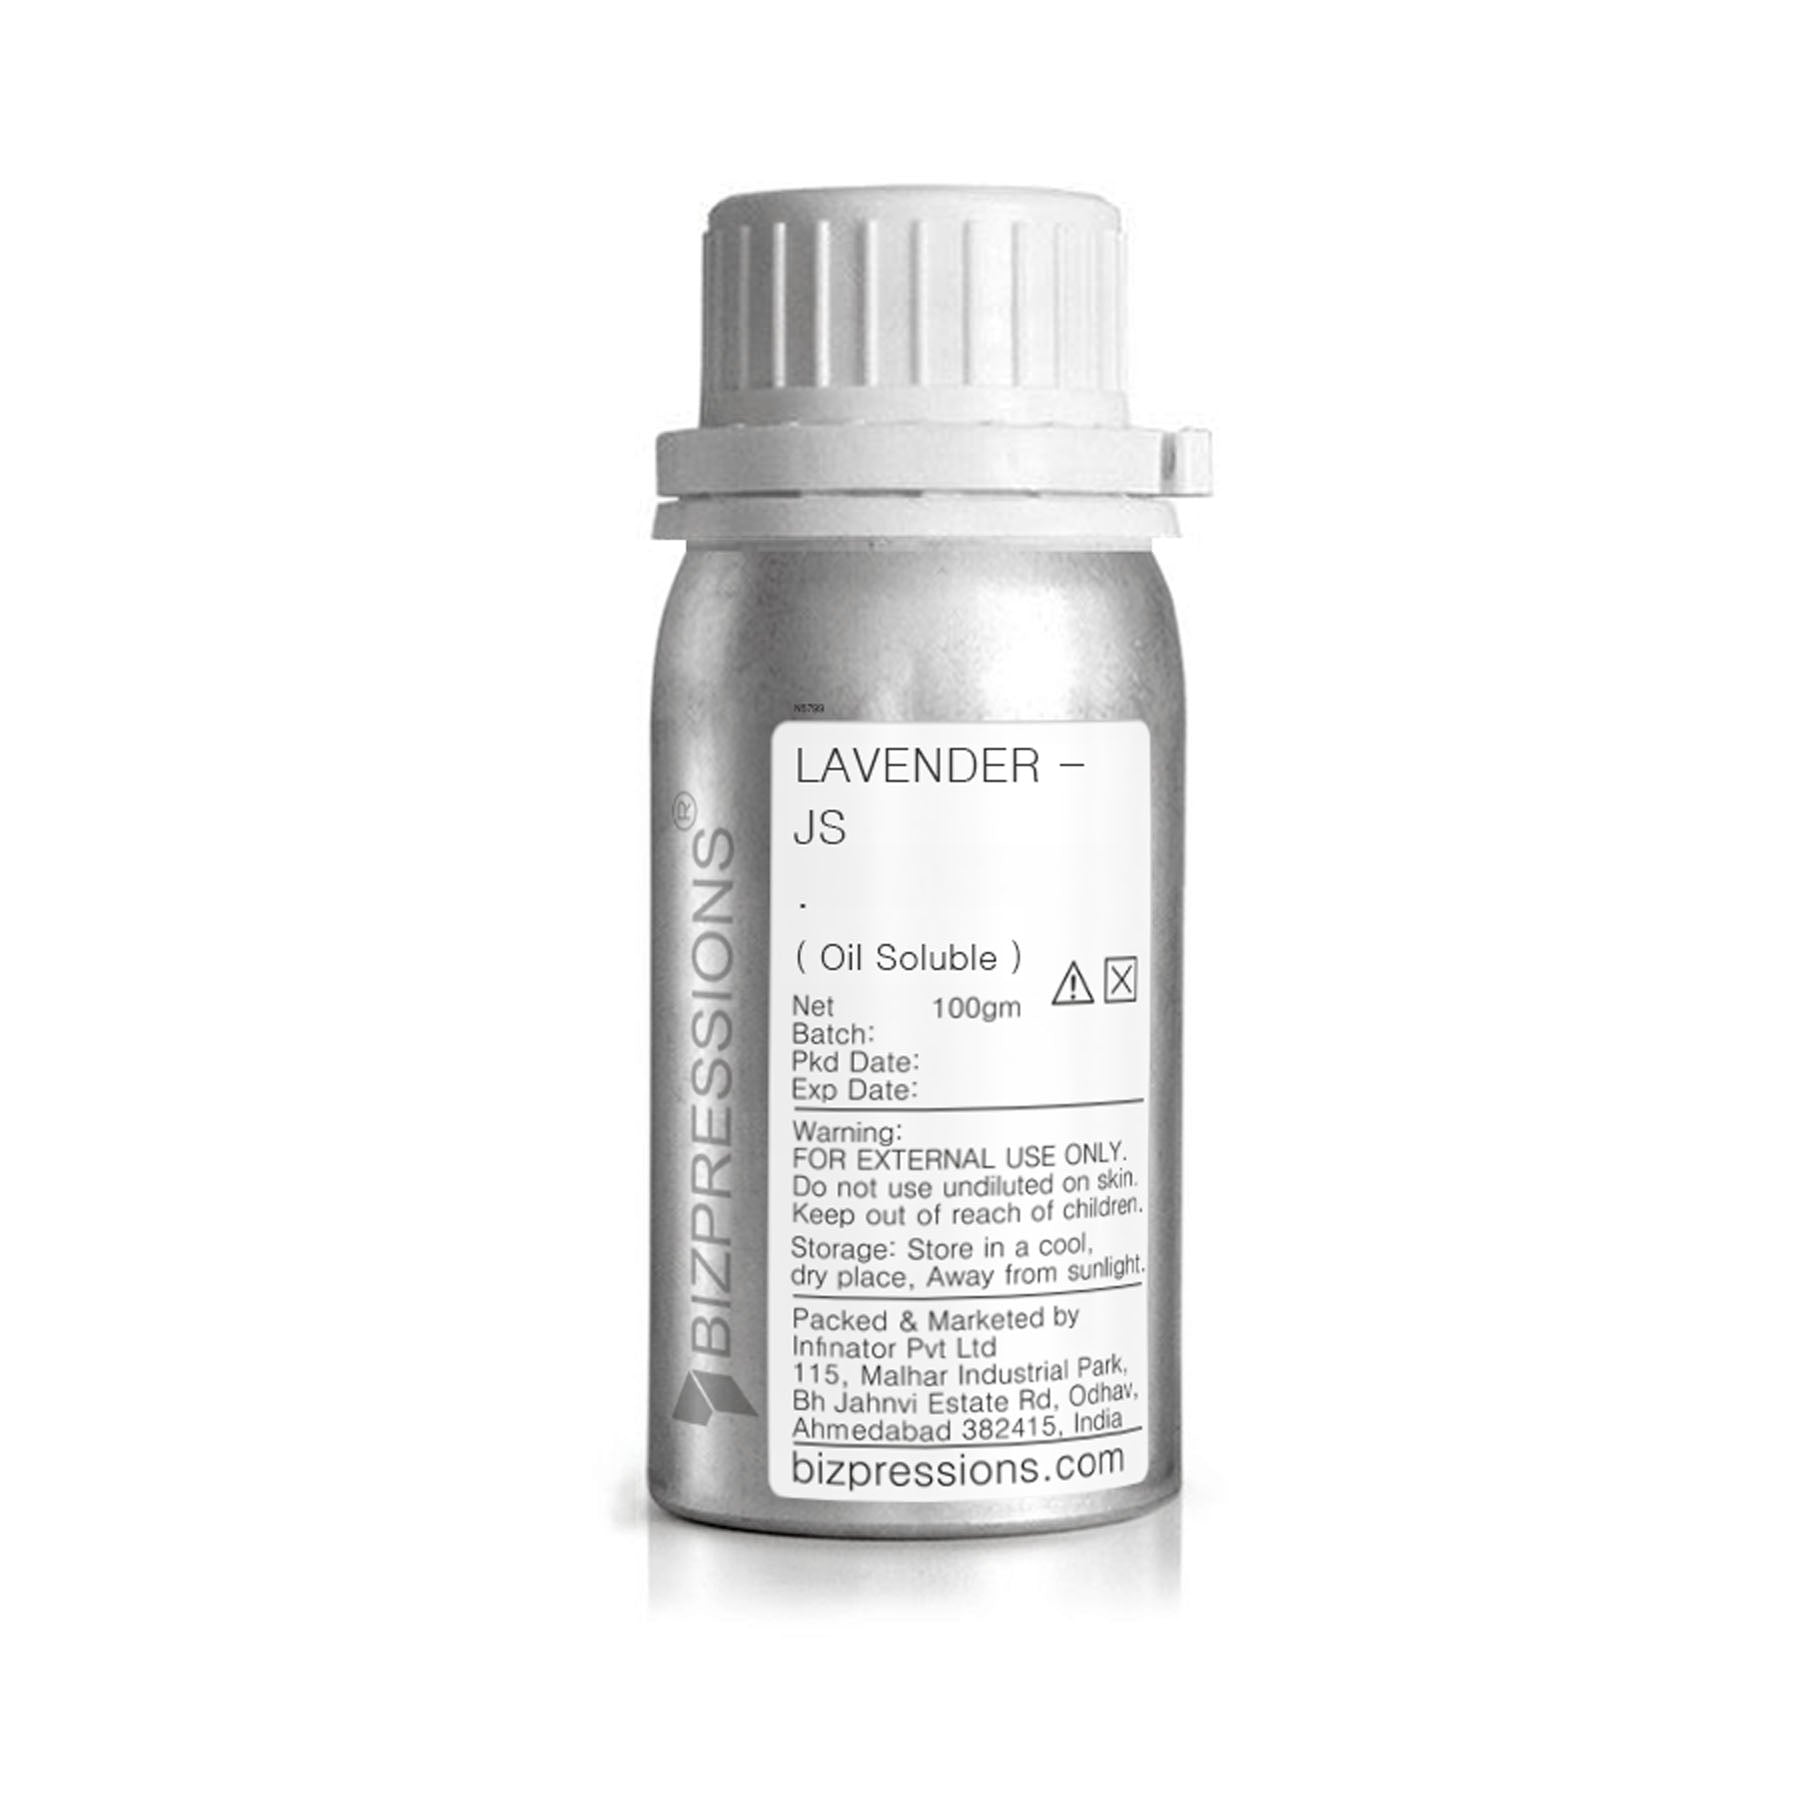 LAVENDER - JS - Fragrance ( Oil Soluble ) - 100 gm